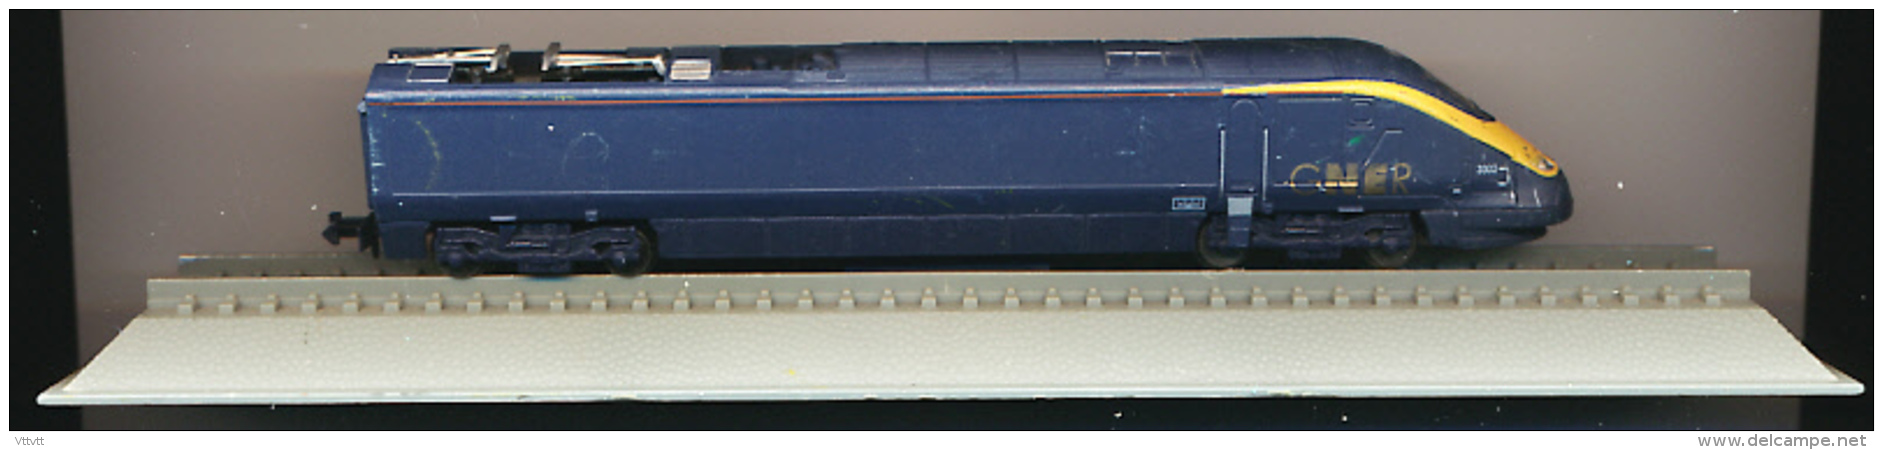 Locomotive : GNER Class 373 "White Rose", Echelle N 1/160, G = 9 Mm, United Kingdom, Grande-Bretagne - Locomotives